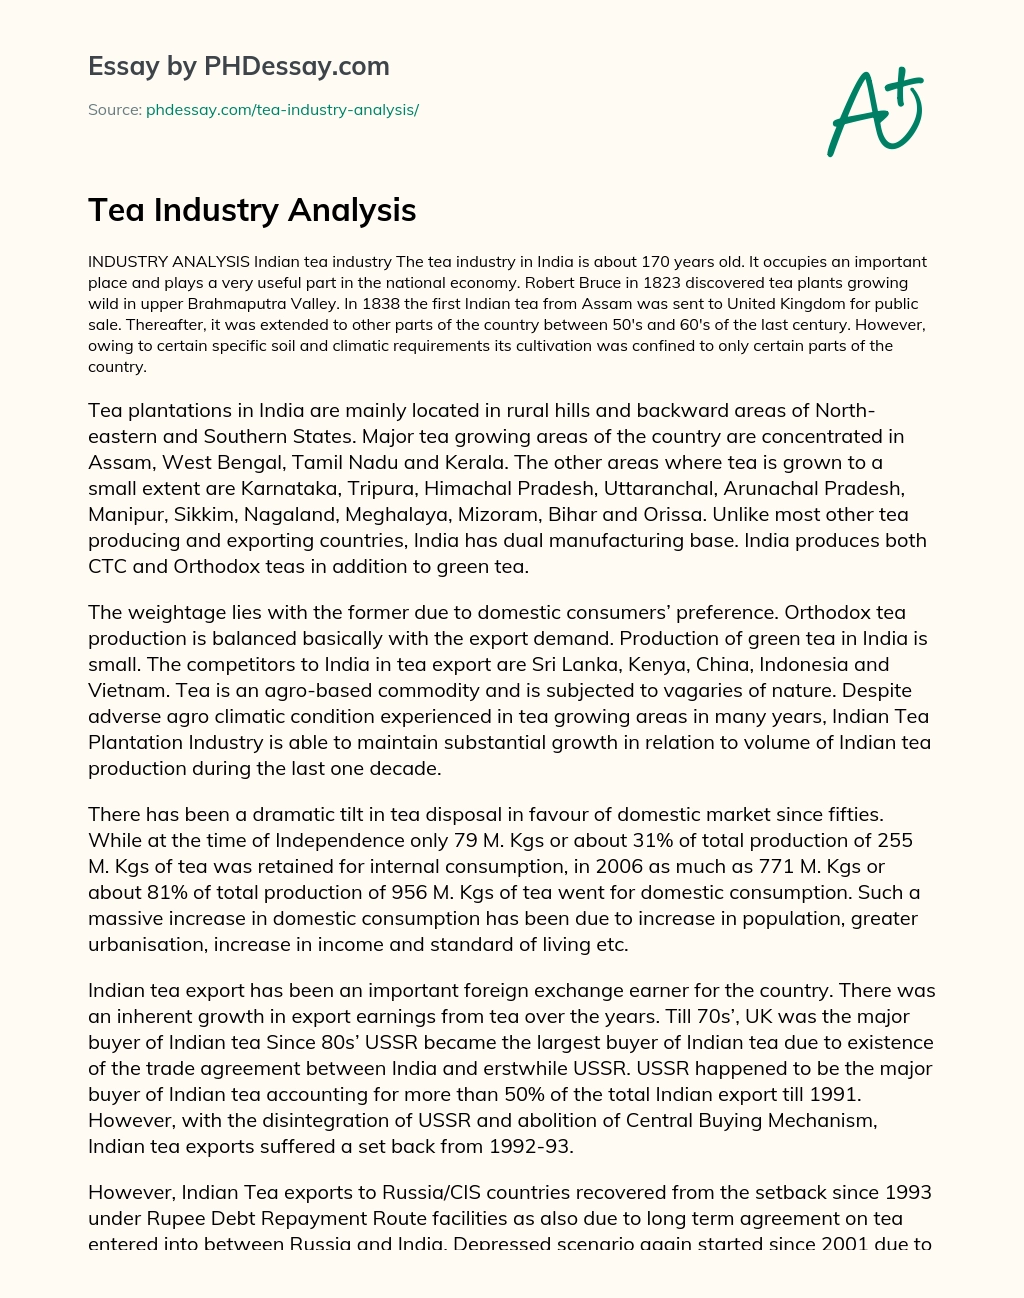 Tea Industry Analysis essay